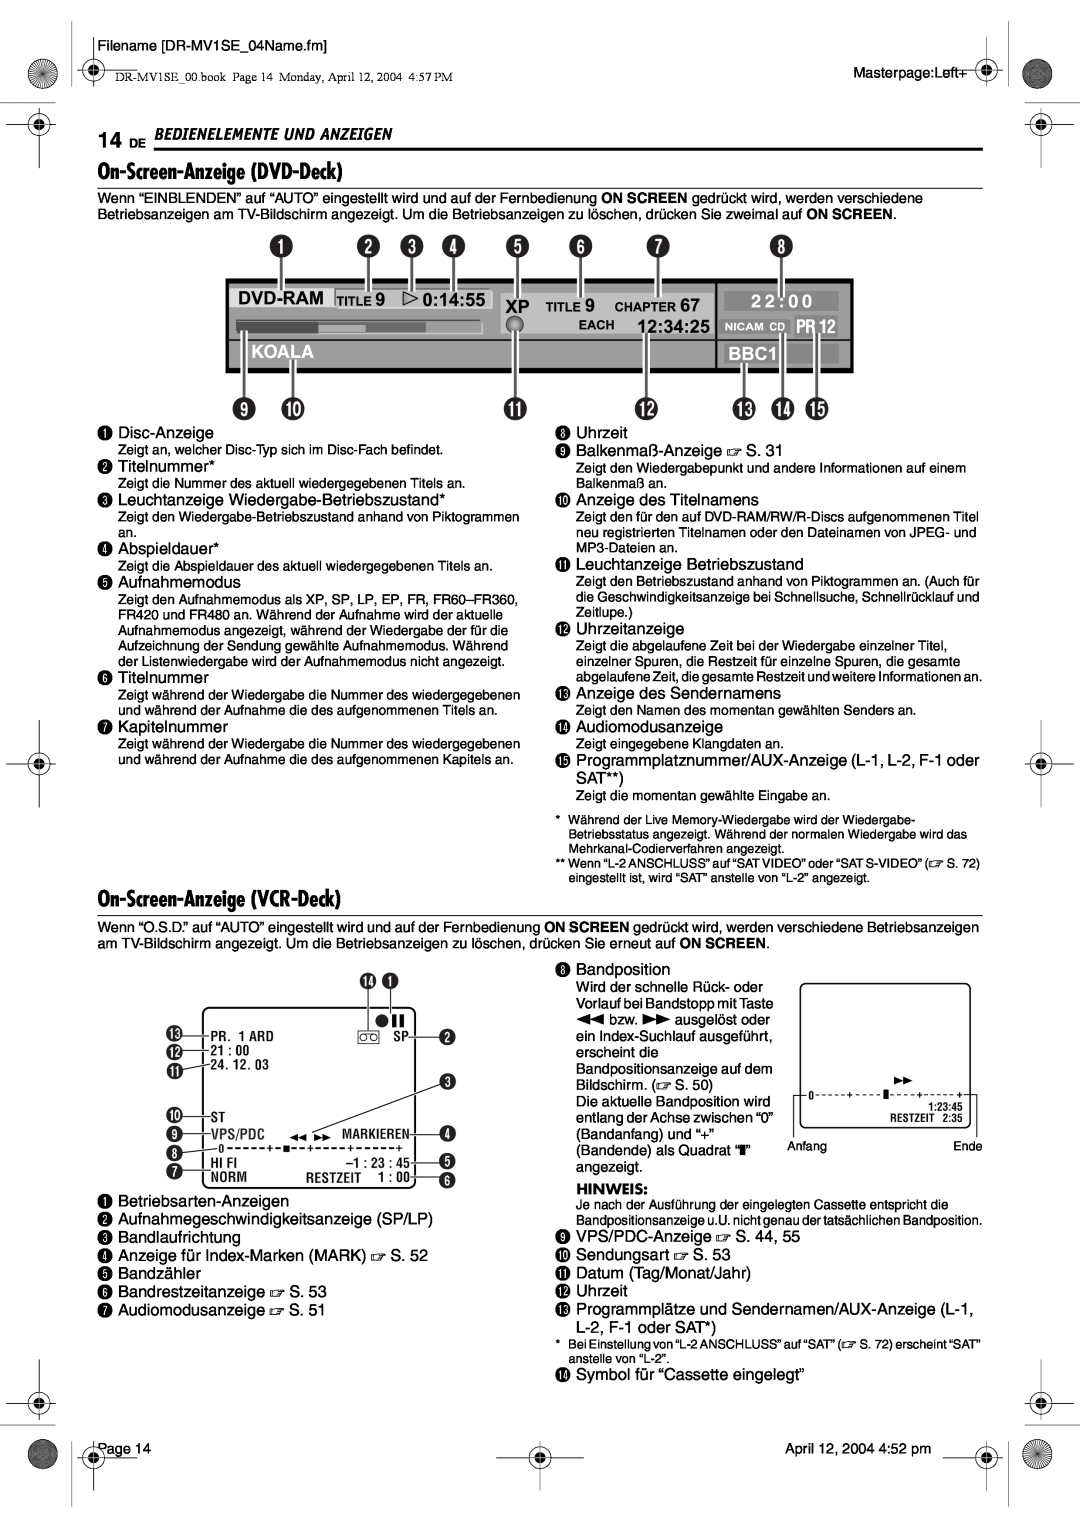 JVC DR-MV1S manual On-Screen-Anzeige DVD-Deck, On-Screen-Anzeige VCR-Deck, De Bedienelemente Und Anzeigen 